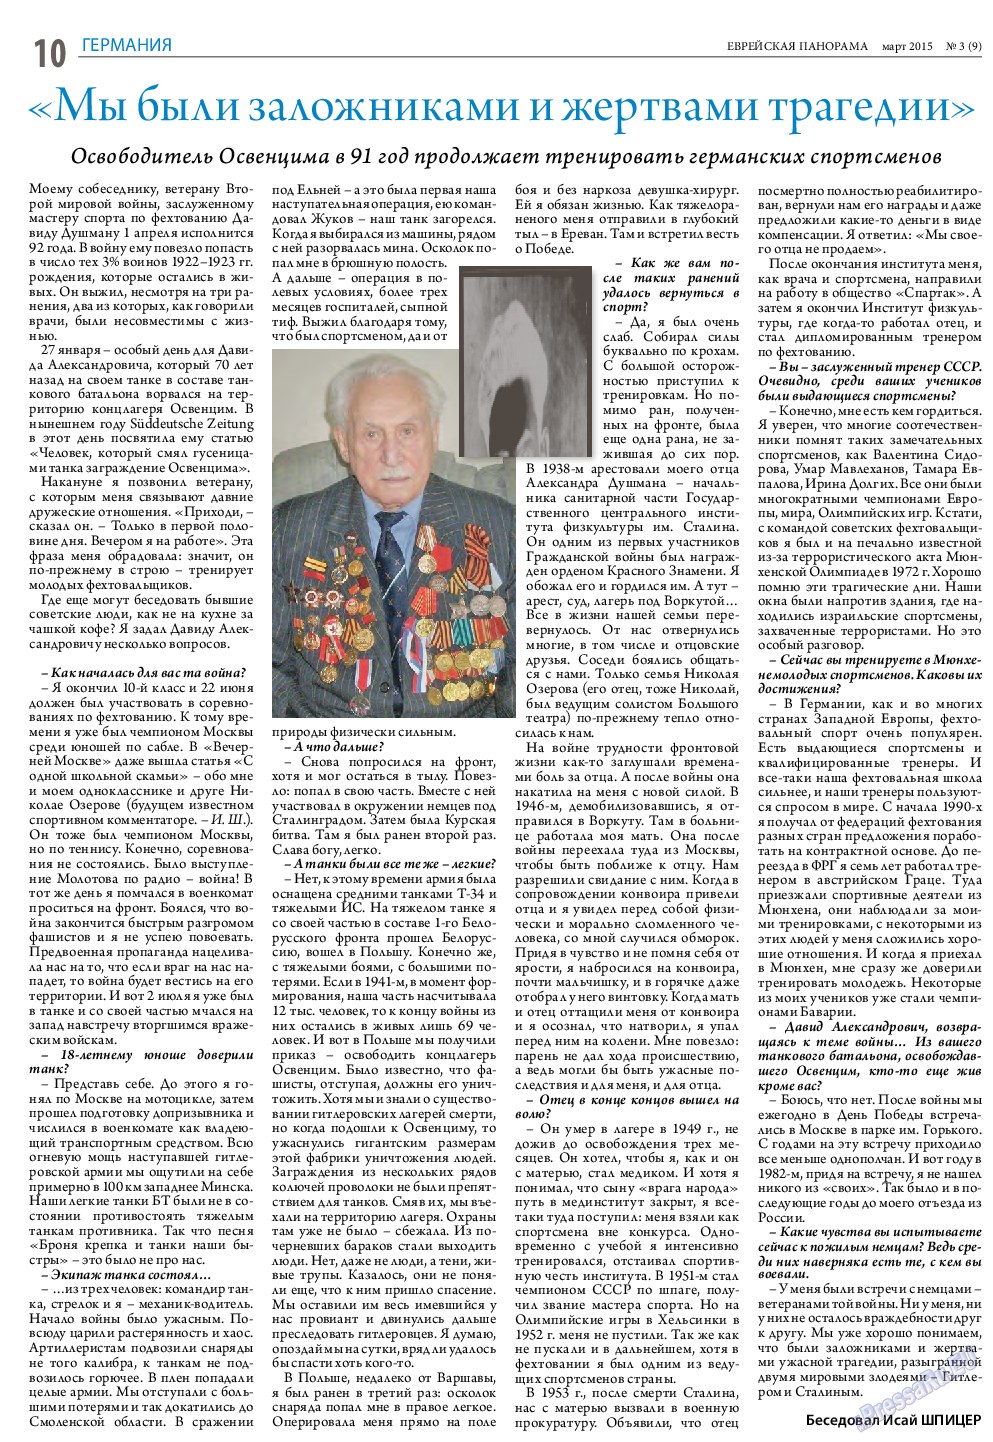 Еврейская панорама, газета. 2015 №3 стр.10